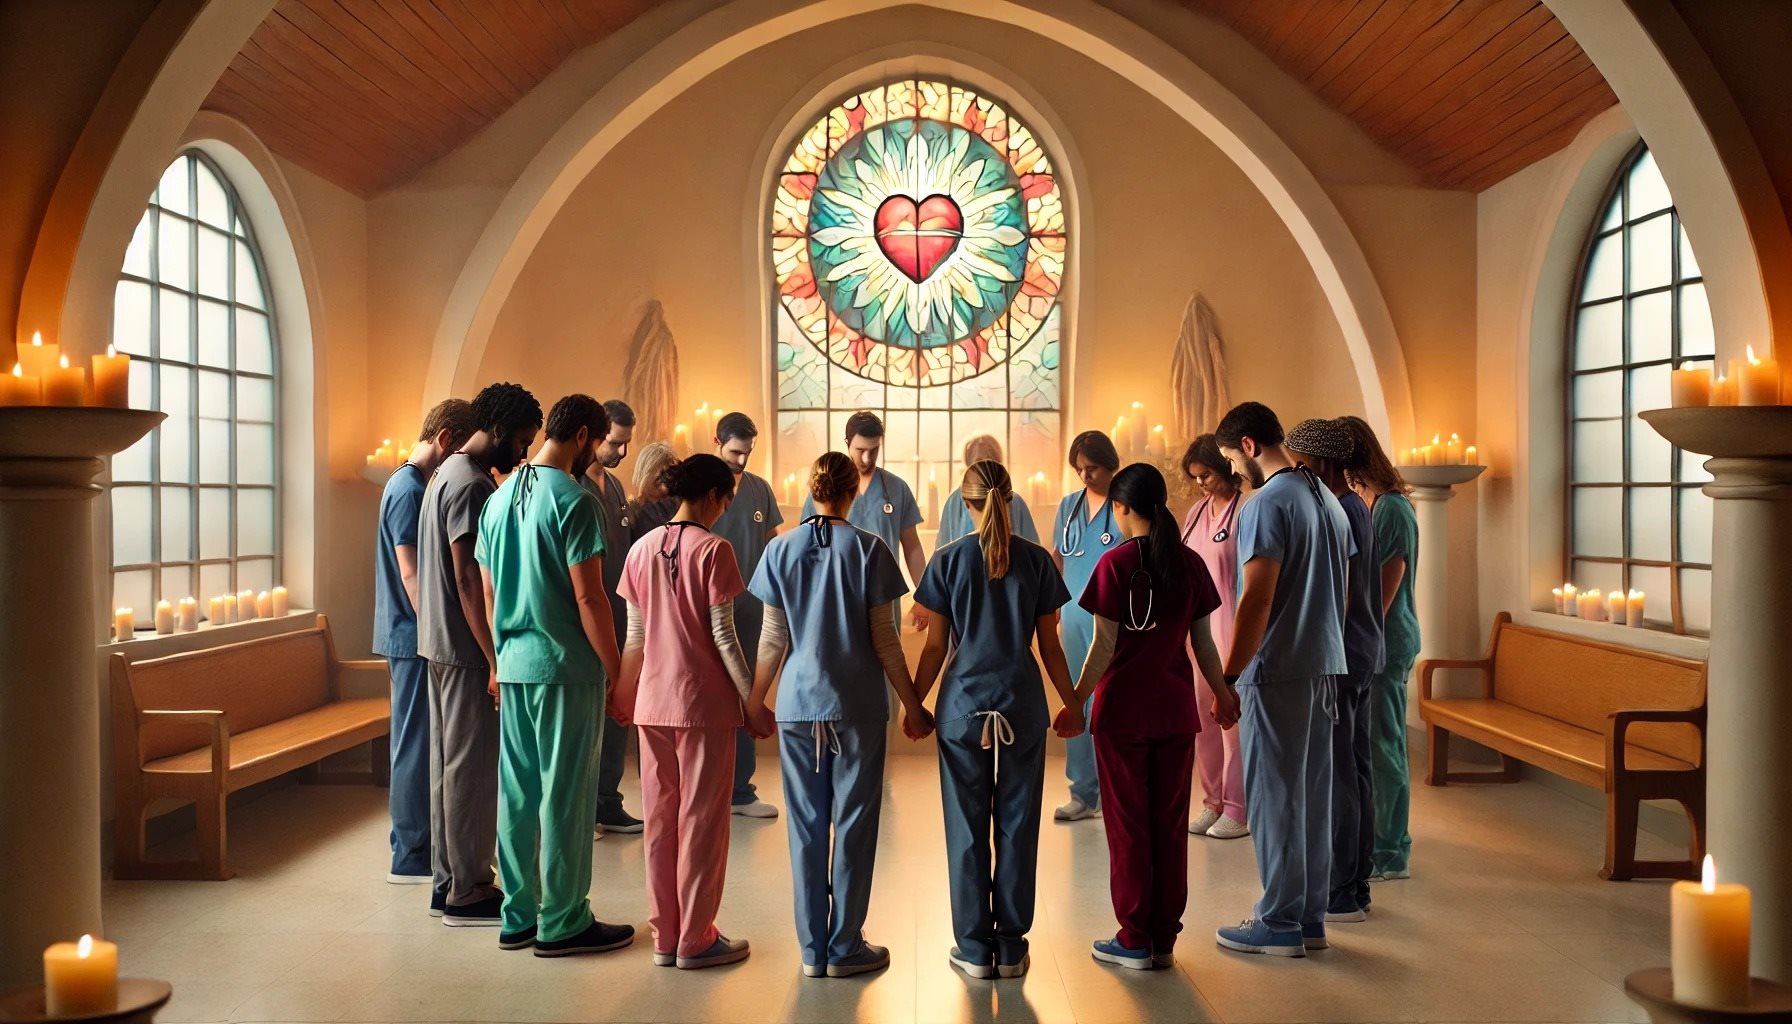 15 Nurses Prayer Requests